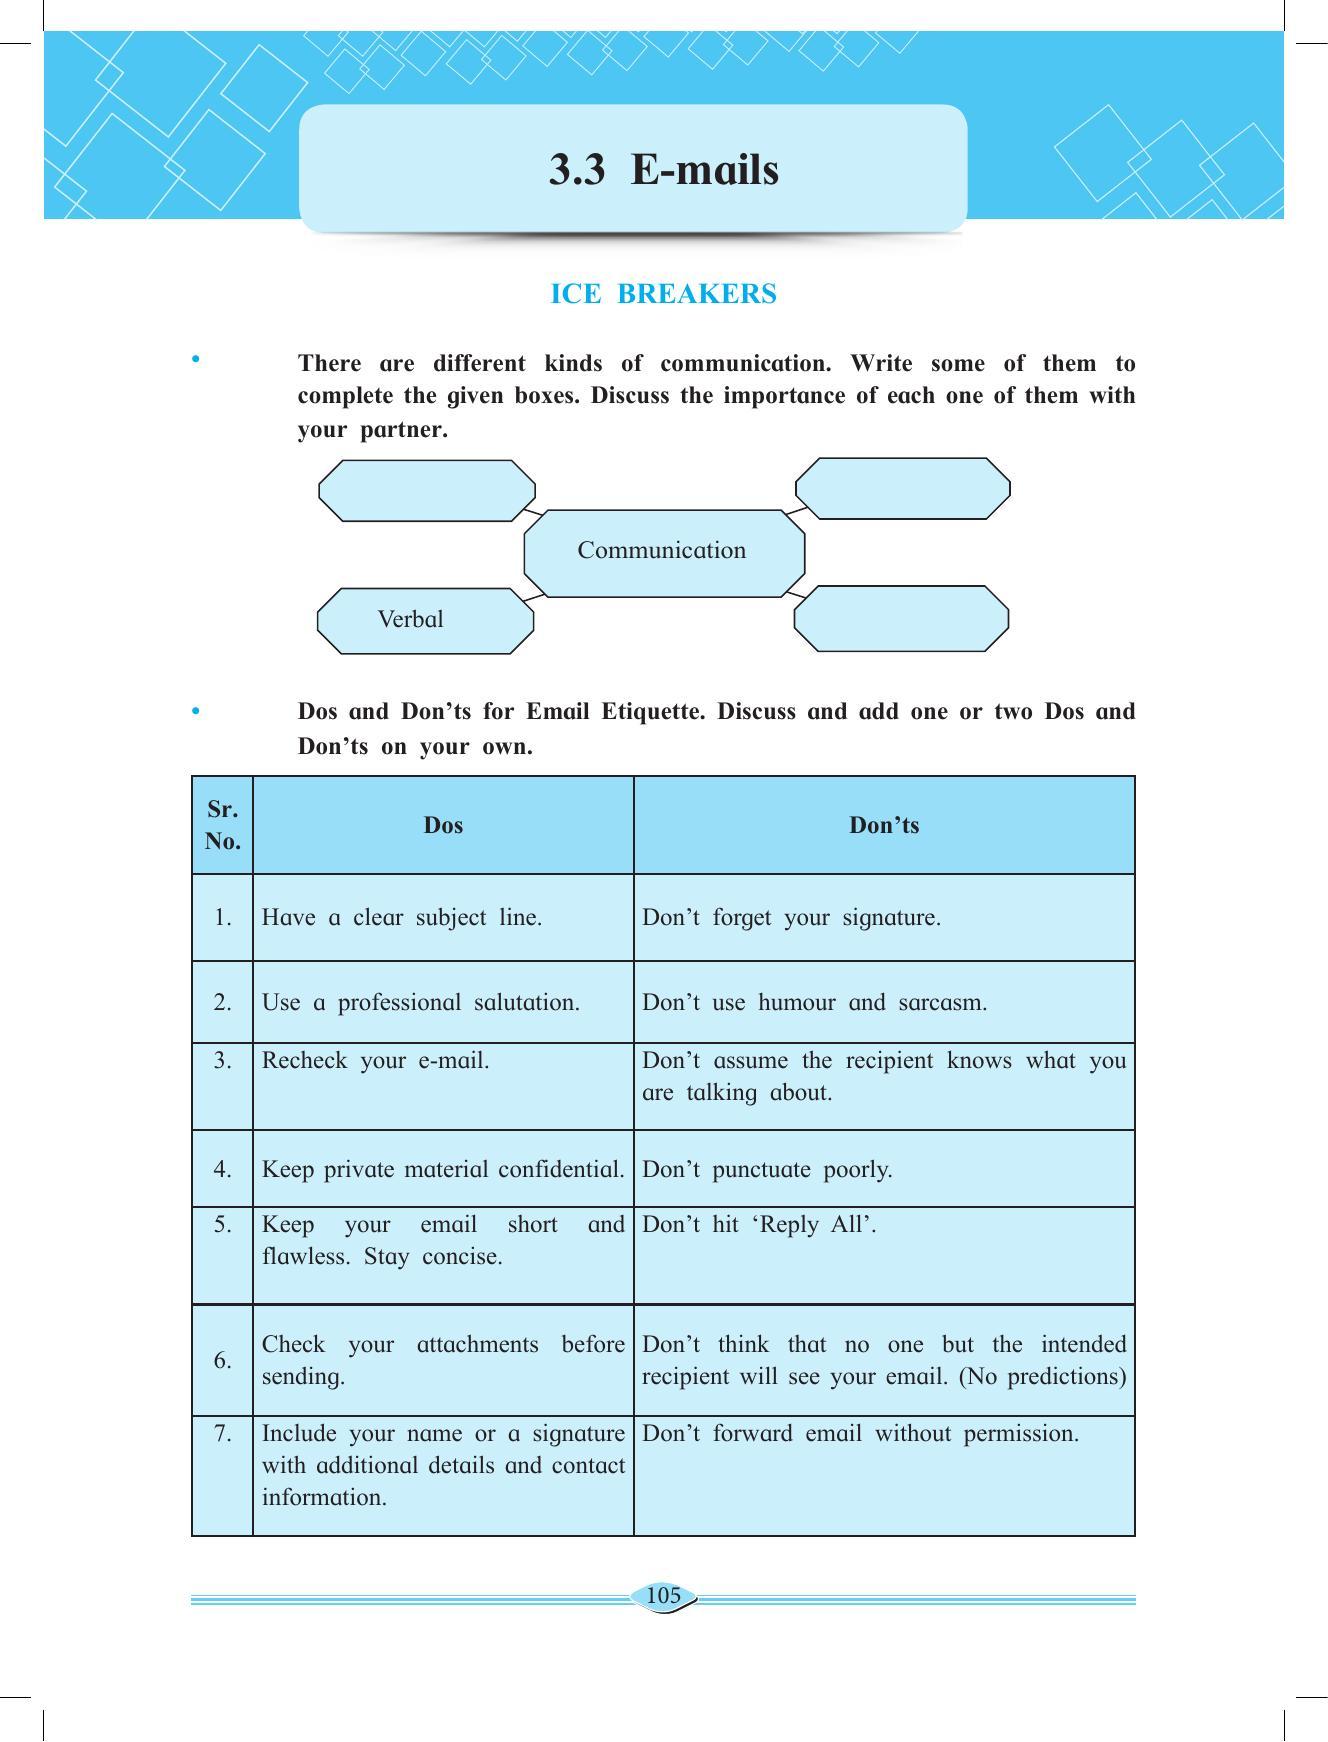 Maharashtra Board Class 11 English Textbook - Page 119